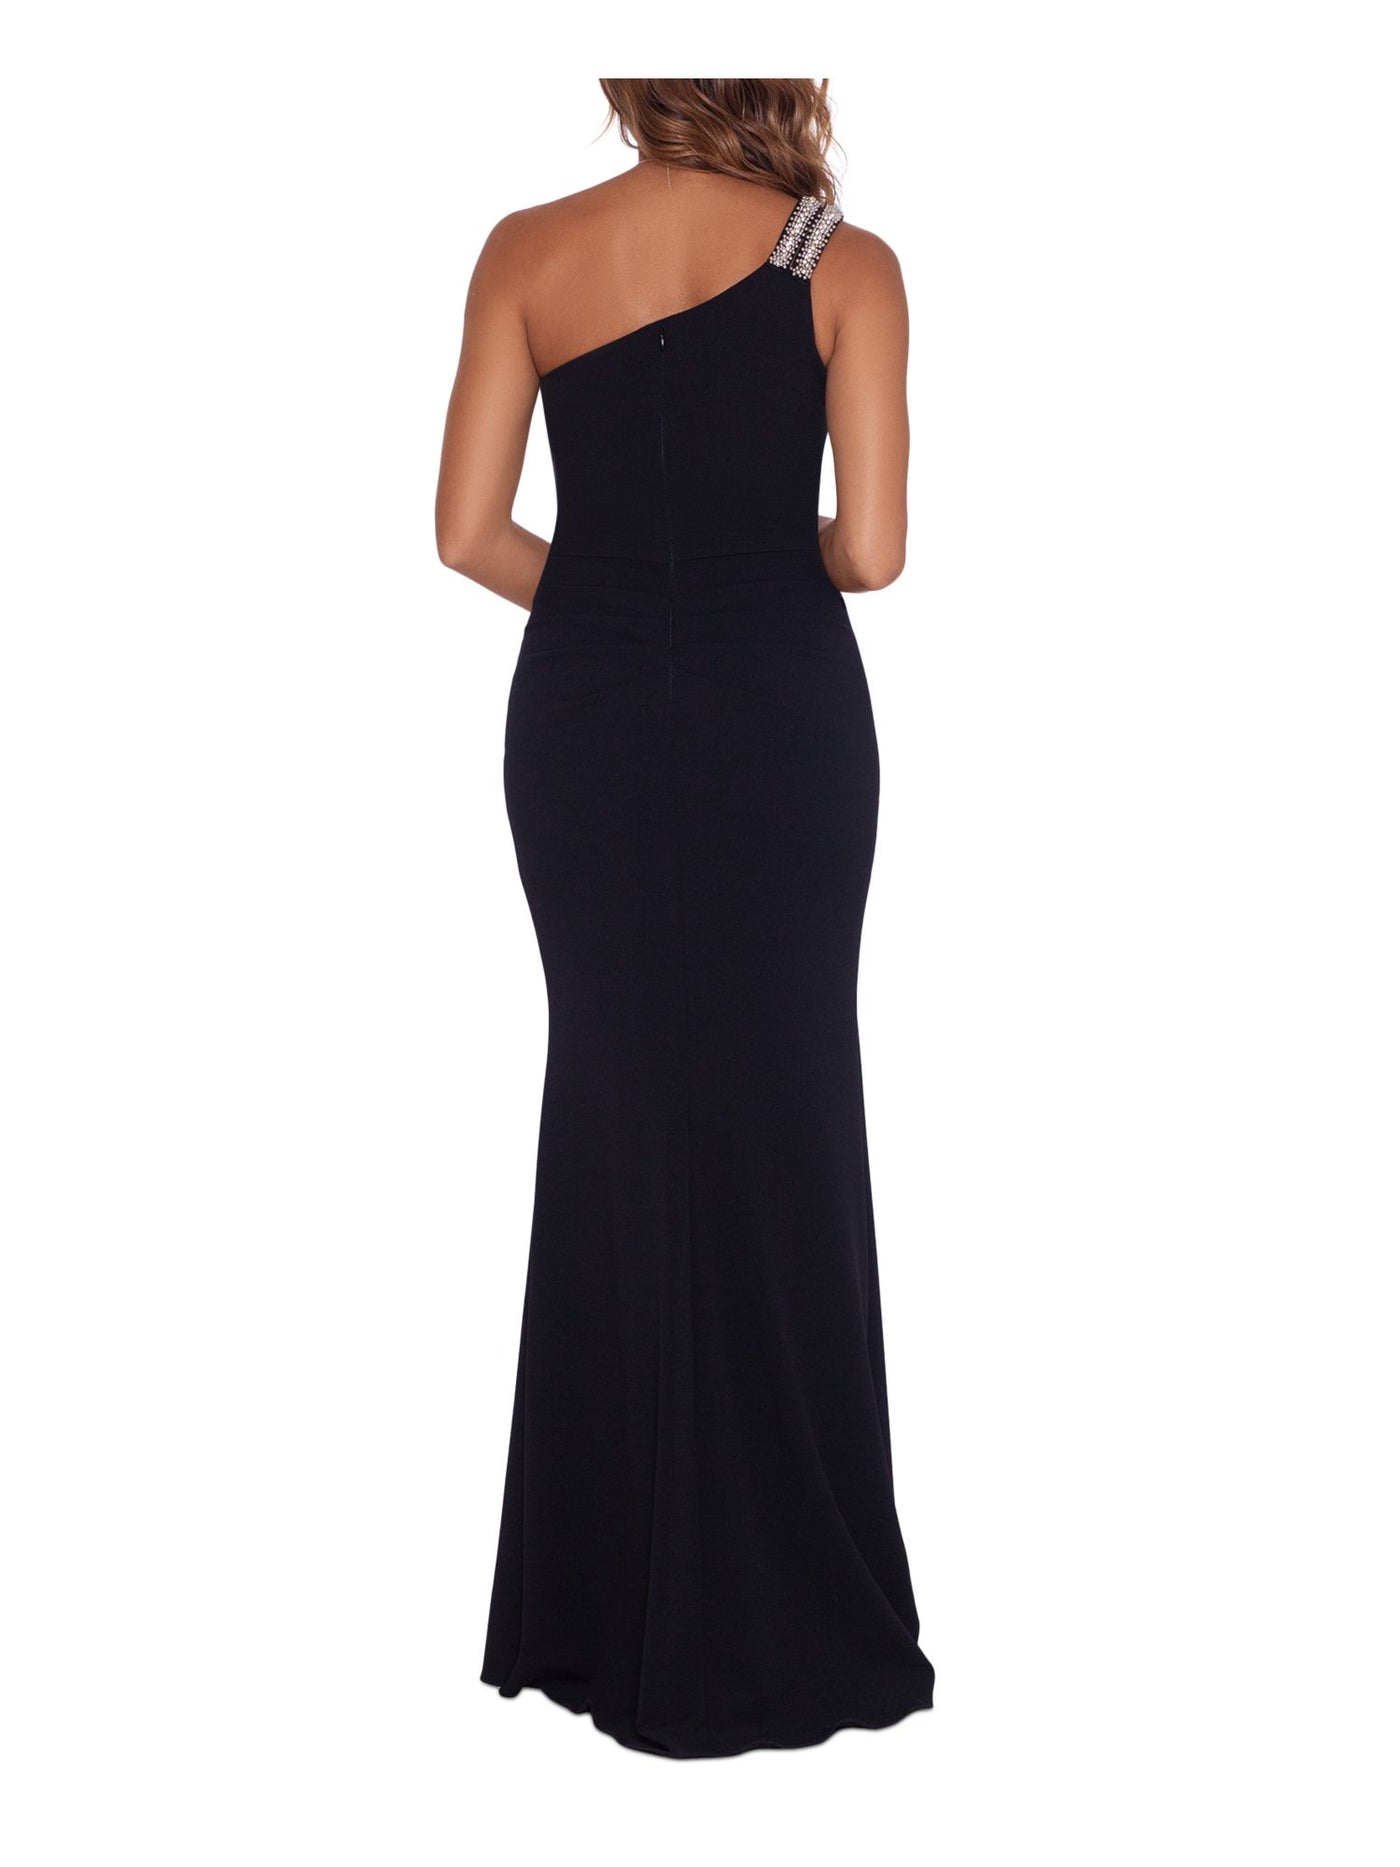 XSCAPE Womens Black Beaded Zippered Sleeveless Asymmetrical Neckline Maxi Cocktail Gown Dress Petites 14P